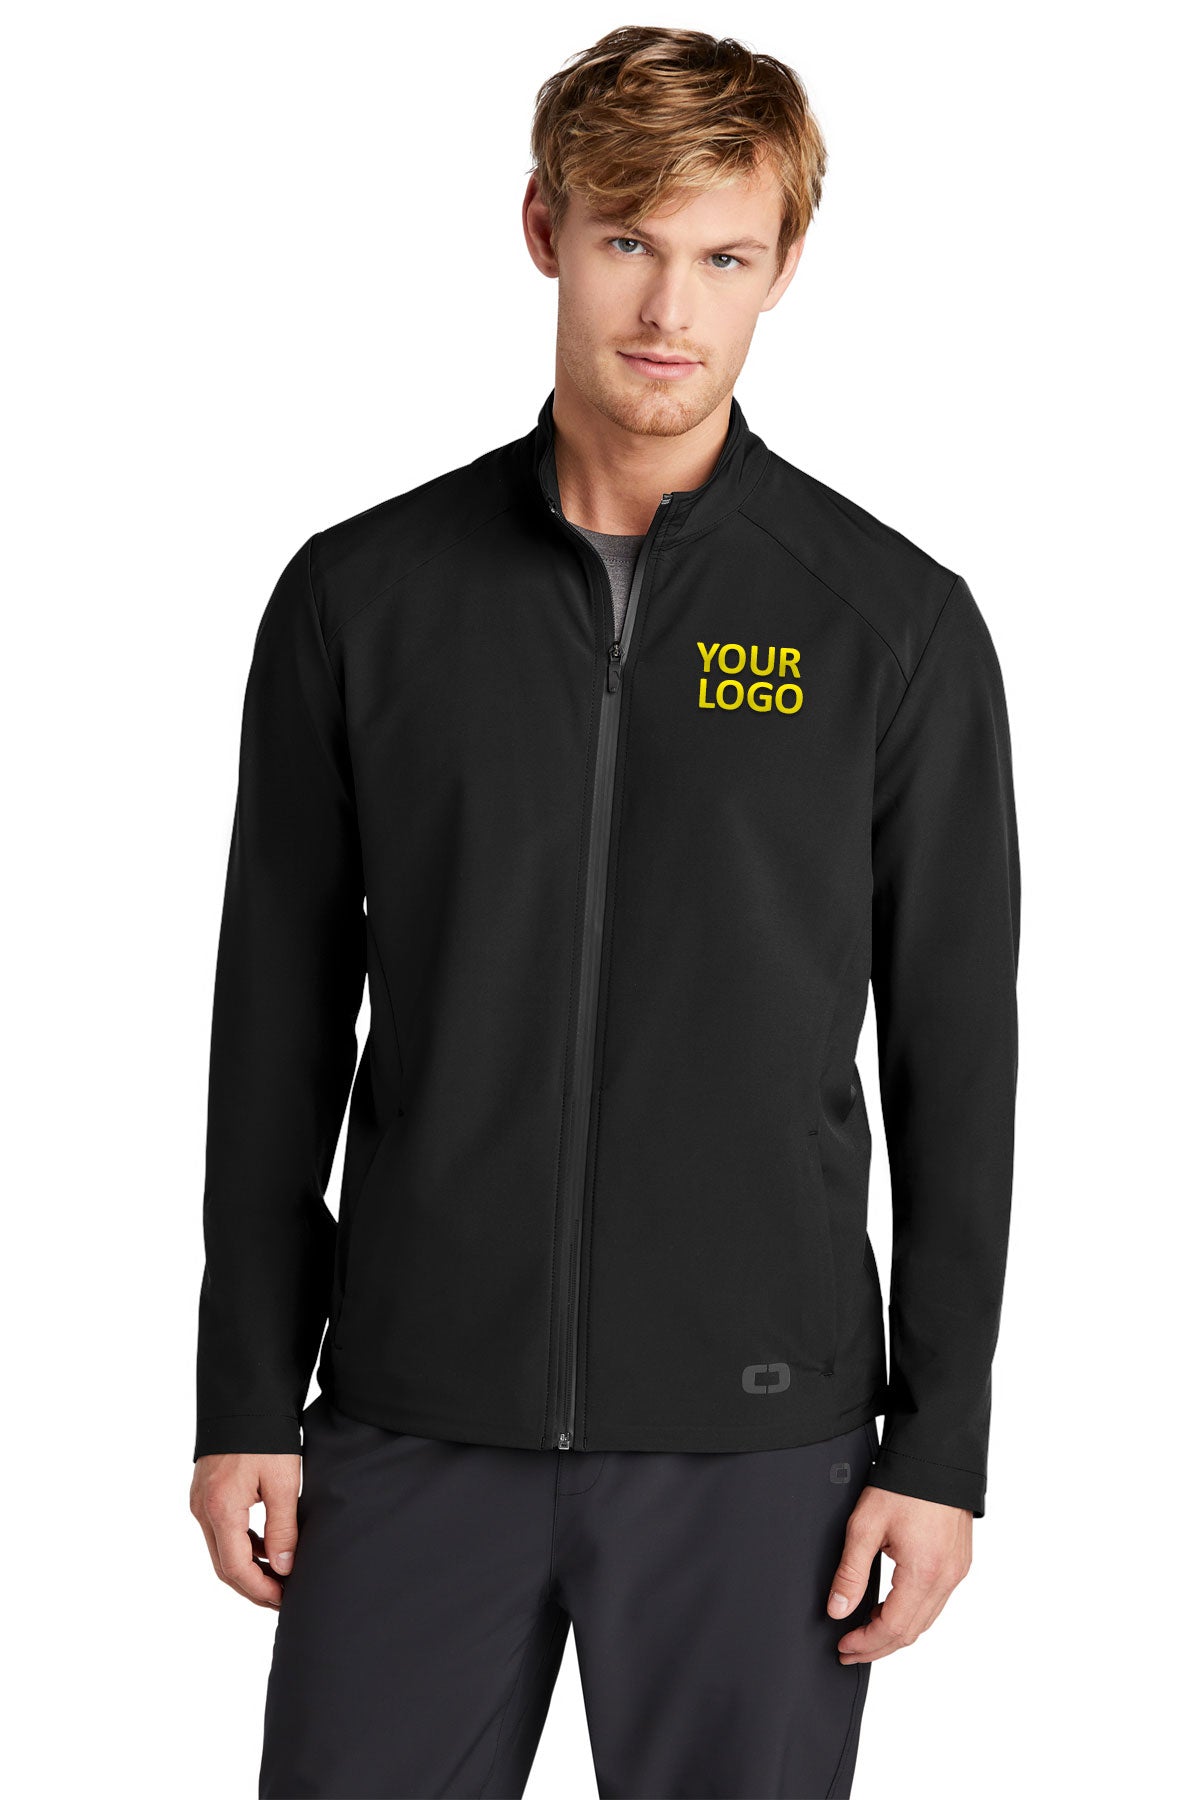 OGIO Blacktop OG706 custom logo sweatshirts embroidered